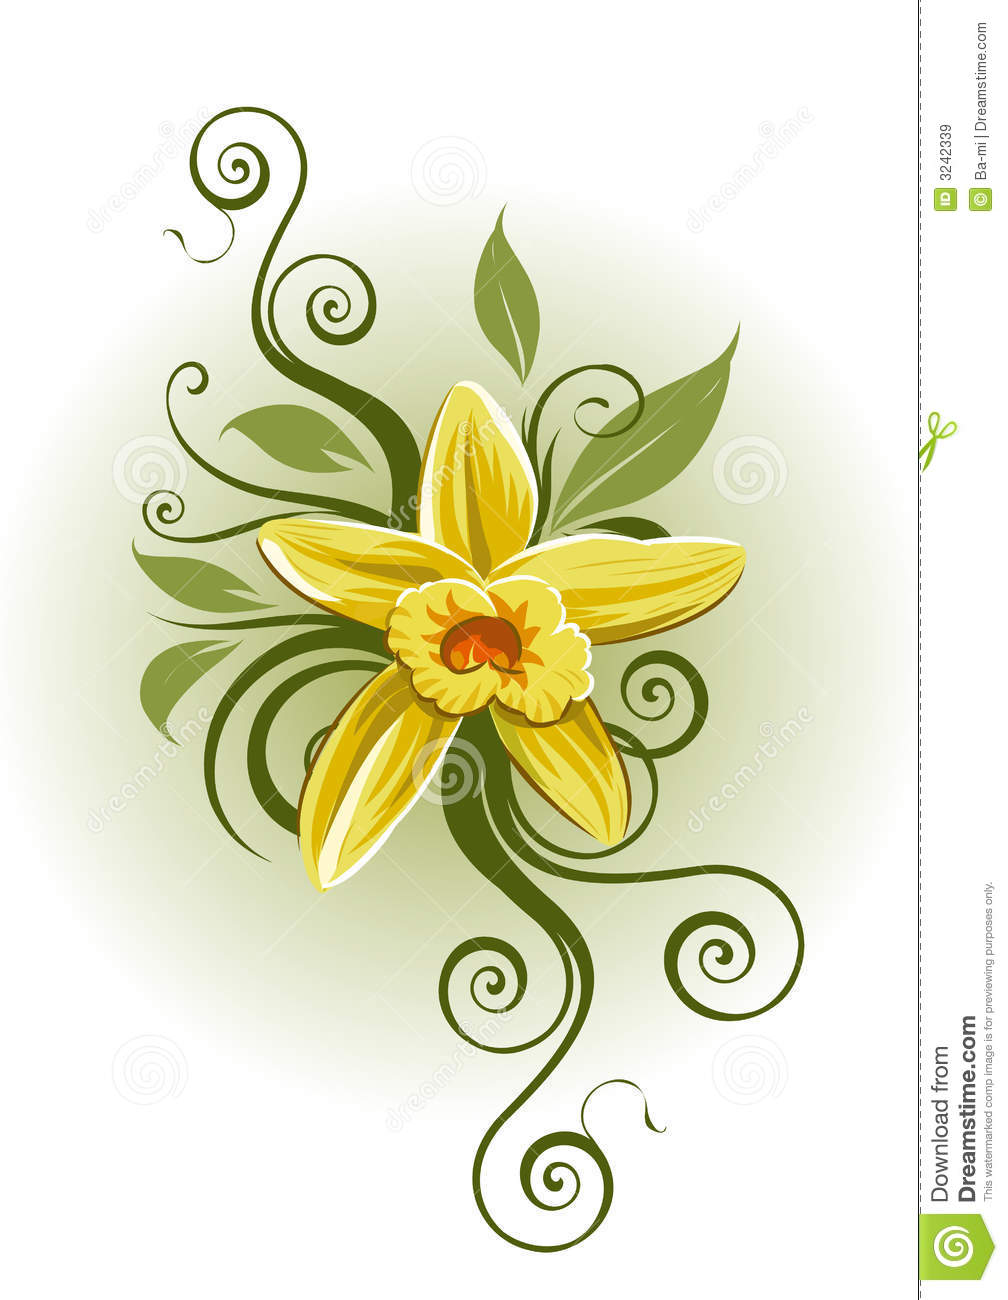 Vanilla Planifolia Royalty Free Stock Images   Image  3242339